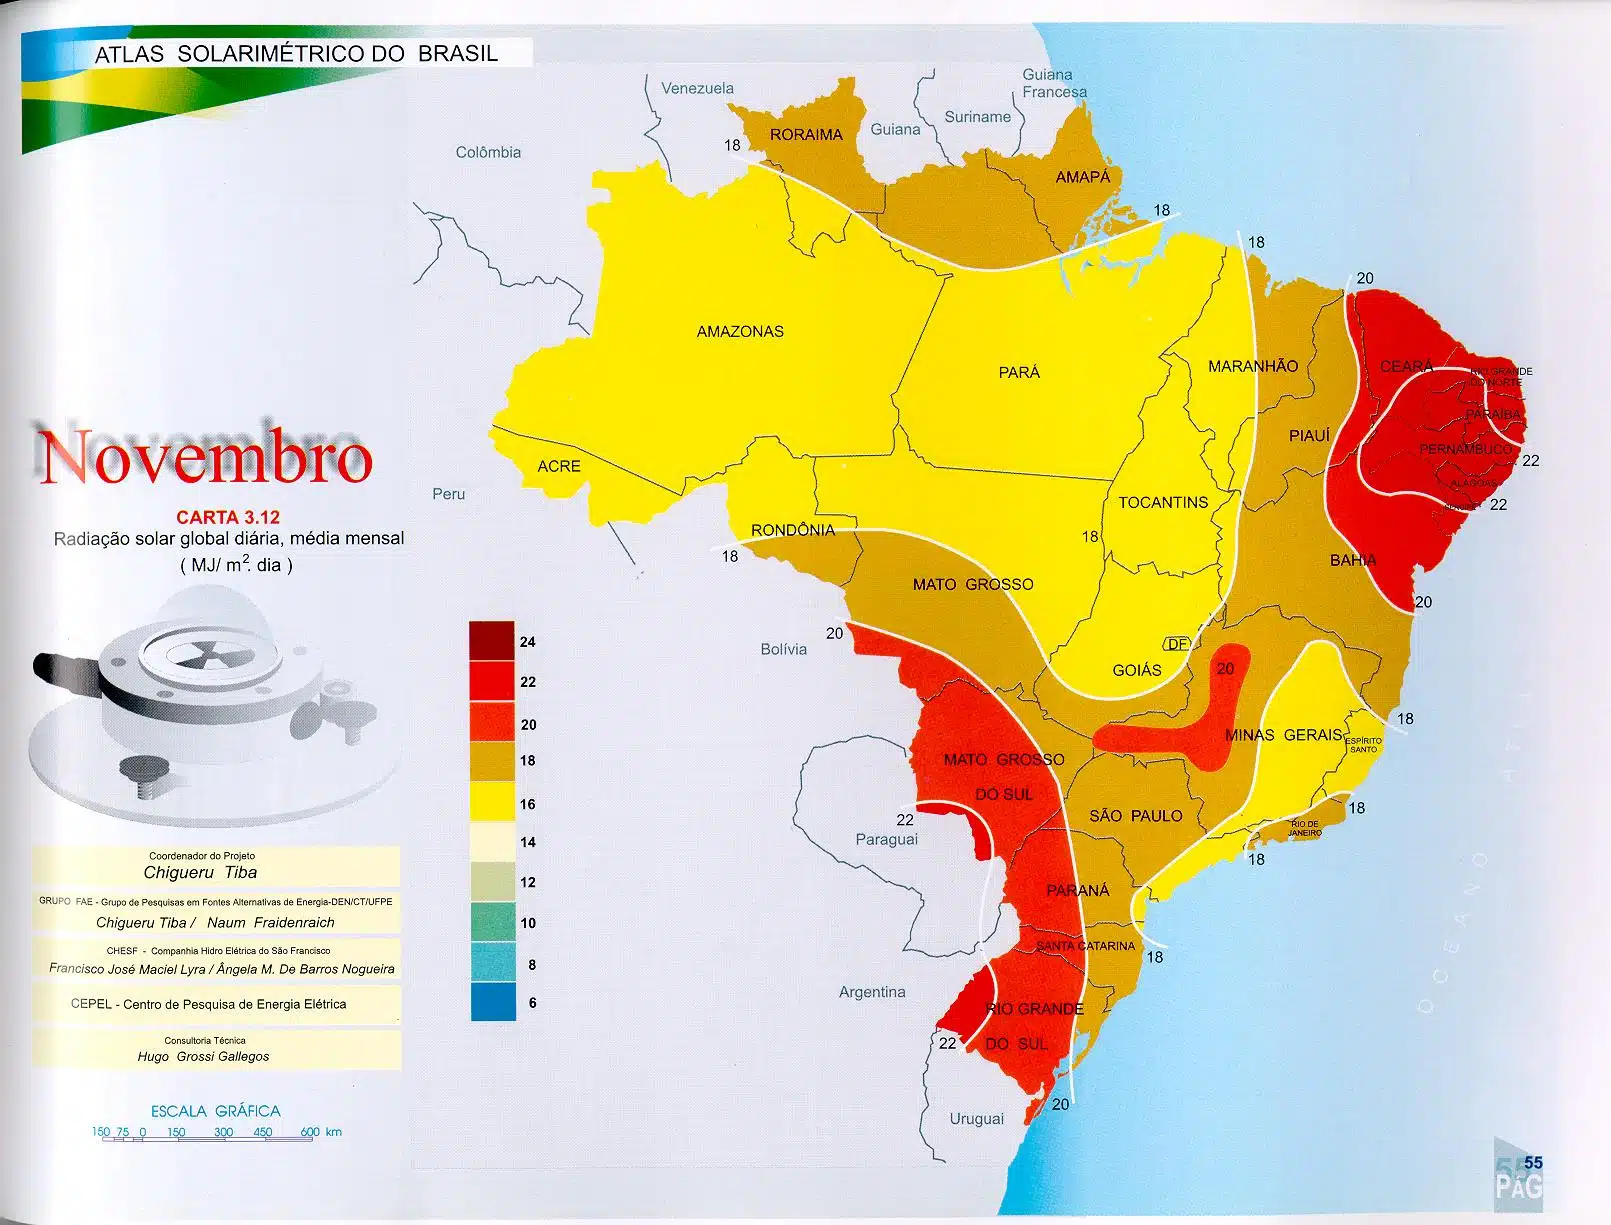 Atlas Solarimetrico do Brasil